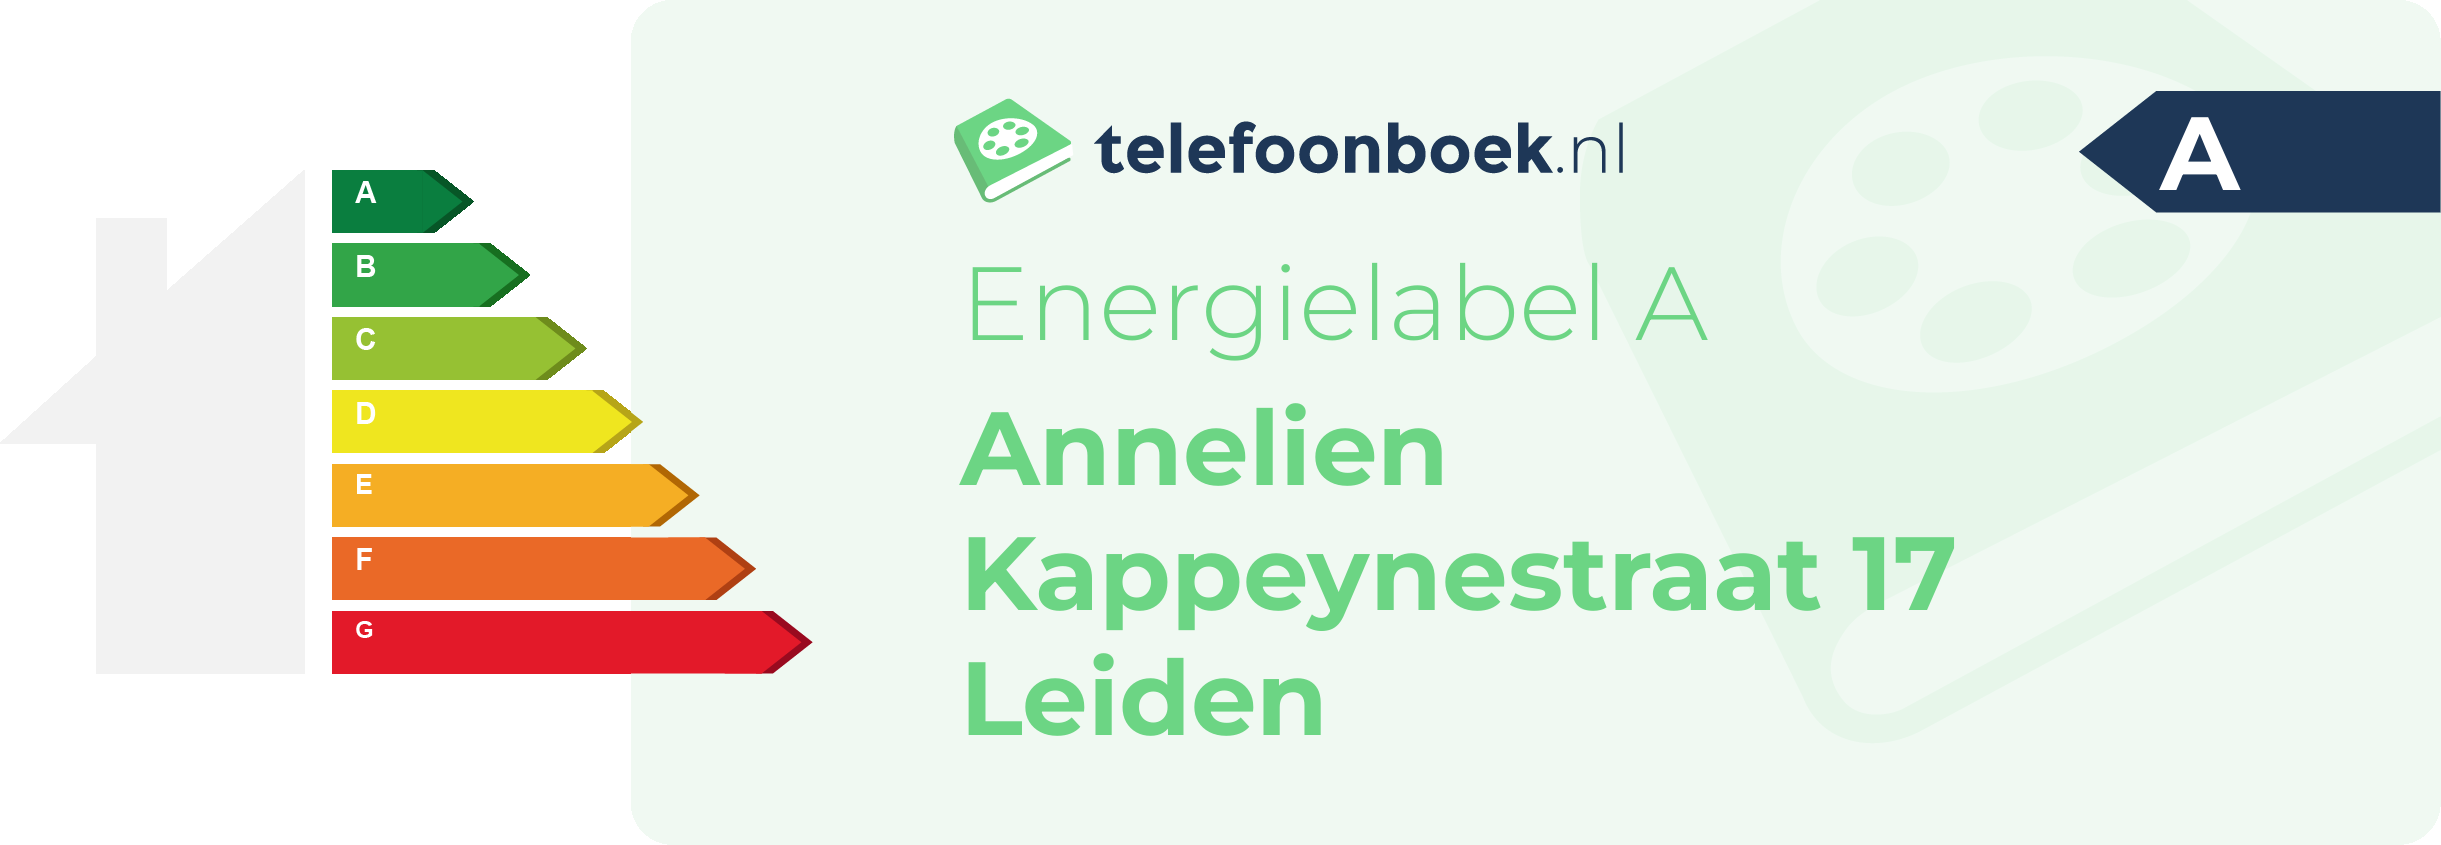 Energielabel Annelien Kappeynestraat 17 Leiden